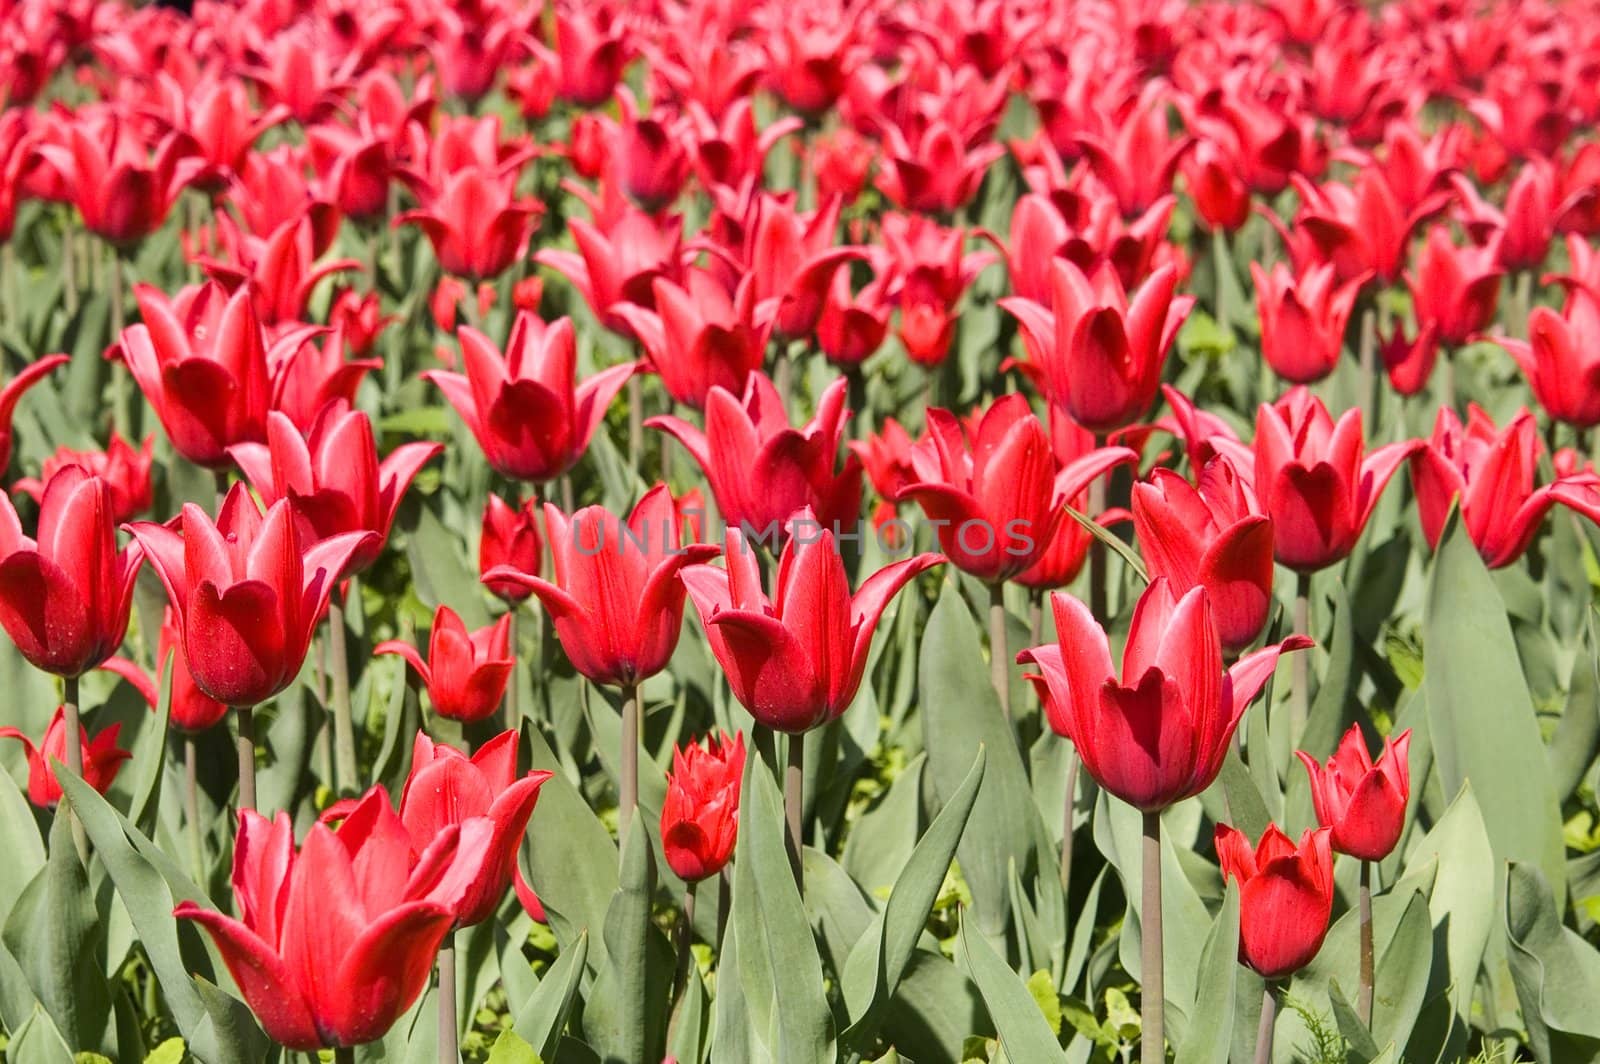 Red tulip field by lilsla